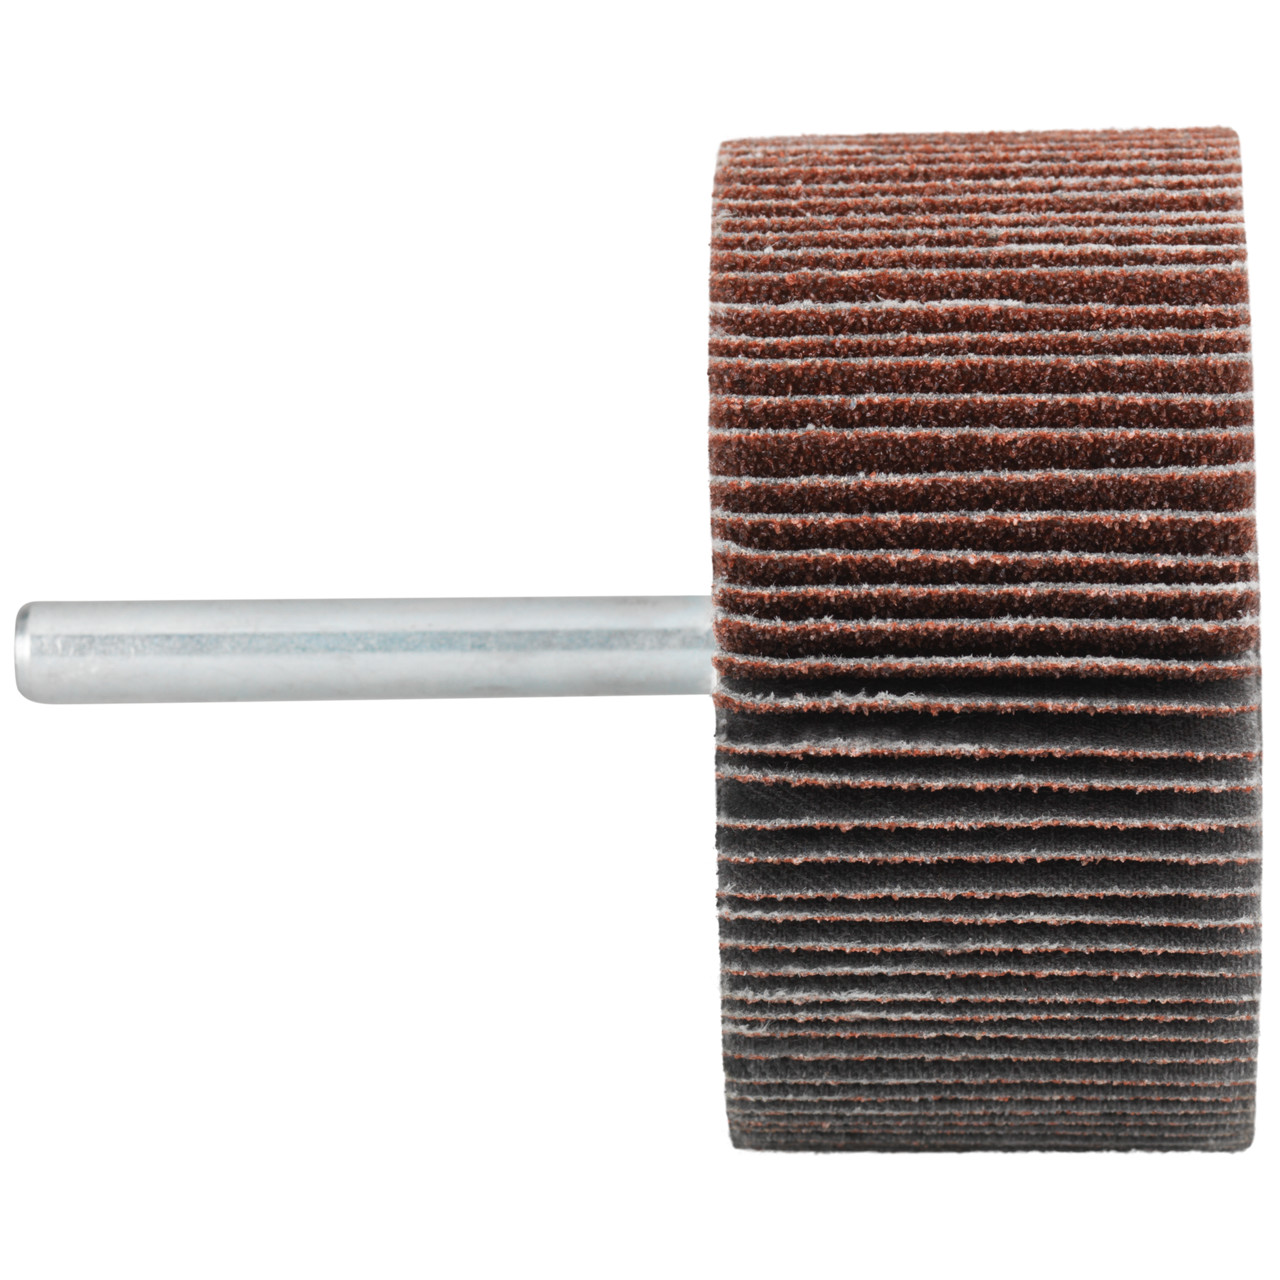 Tyrolit A-P01 C X Perni DxD 60x20 Per acciaio, acciaio inox e metalli non ferrosi, P150, forma: 52LA, Art. 816956